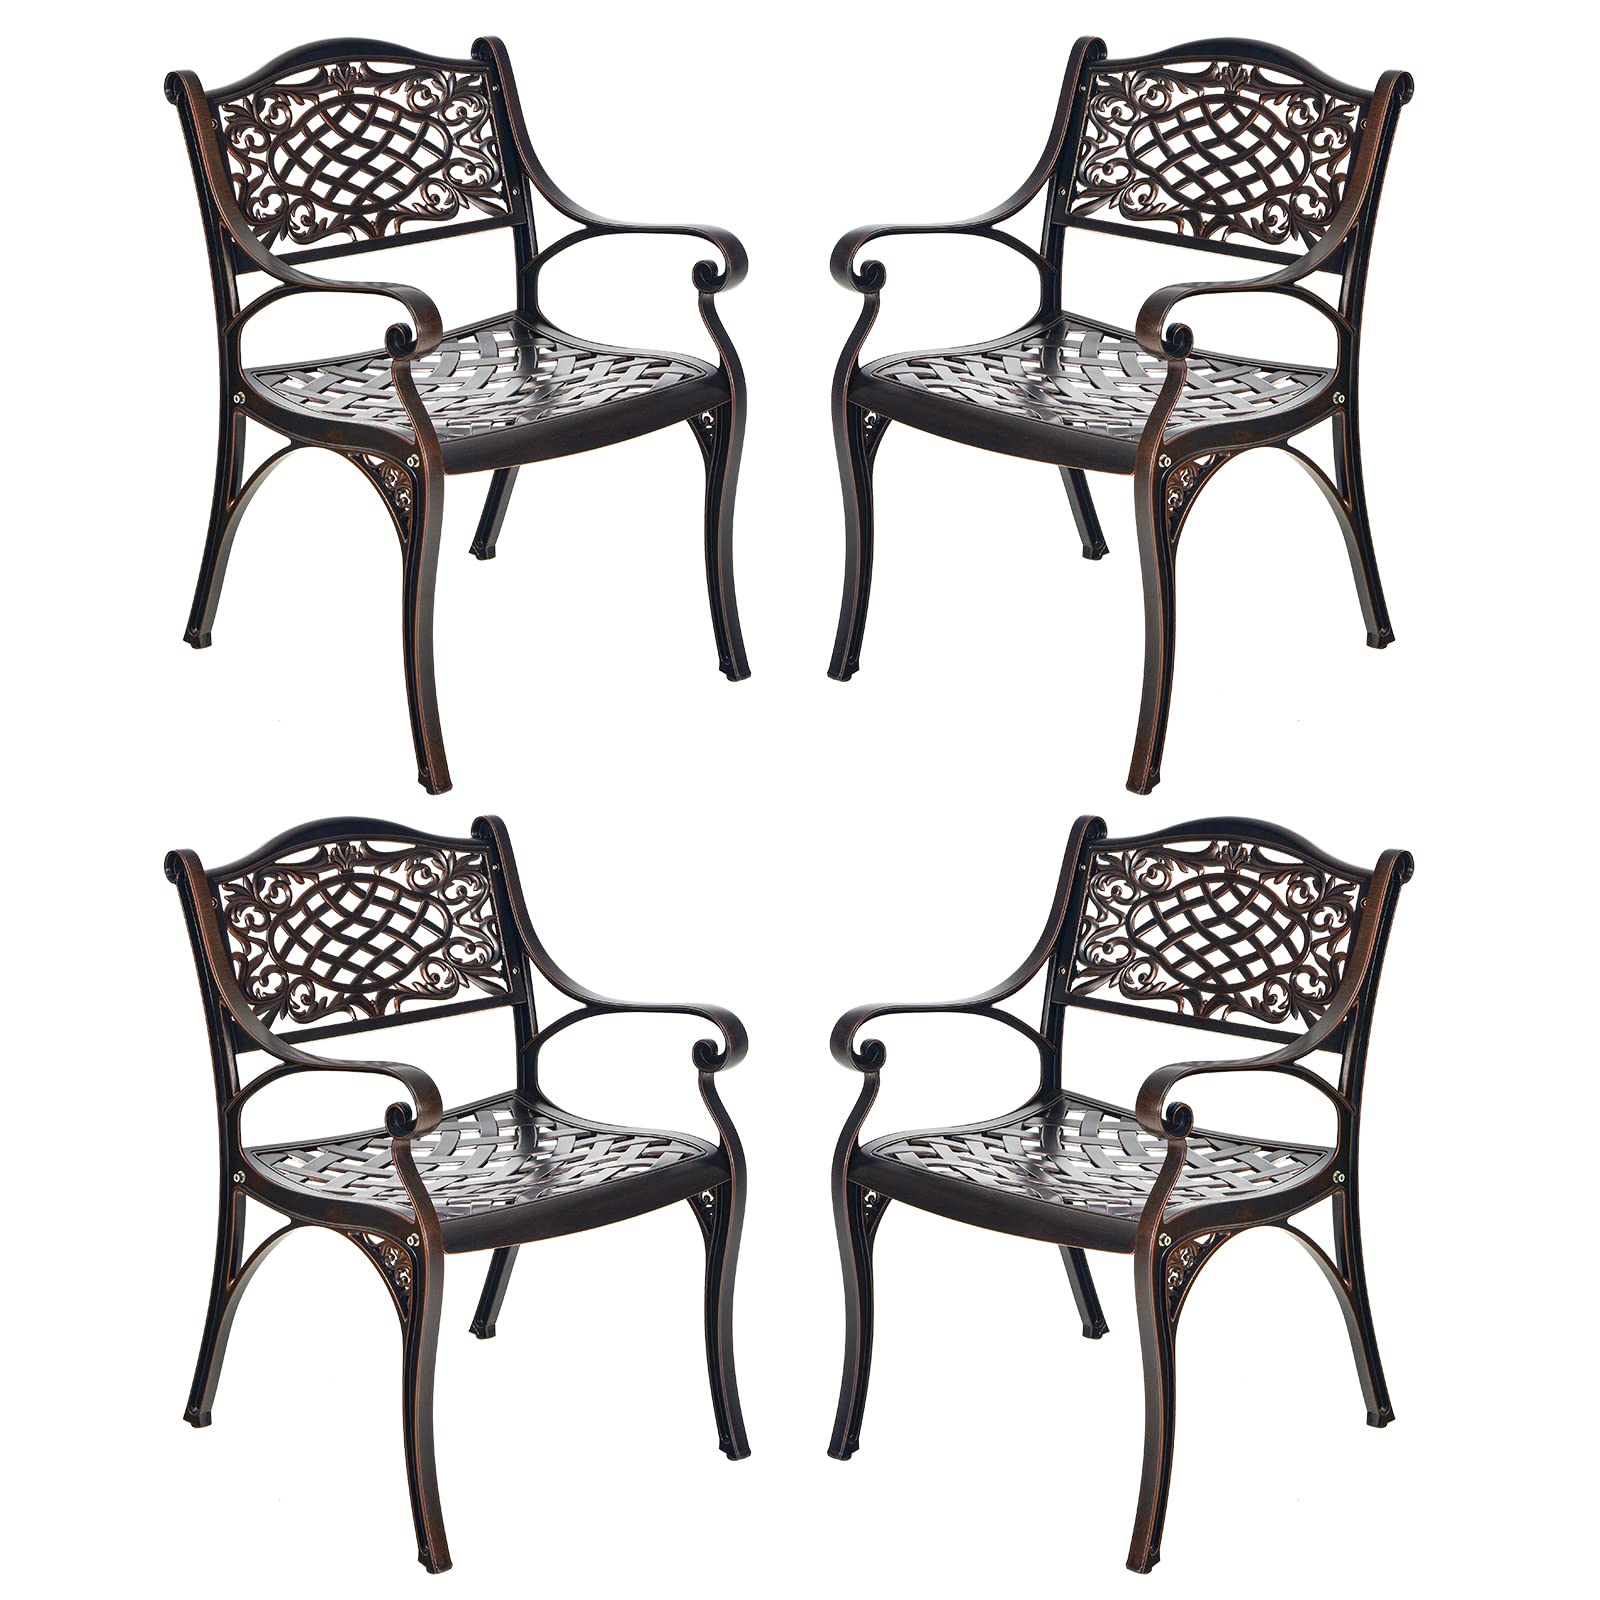 Giantex Patio Chairs, Outdoor Armchairs for Garden Deck Backyard Poolside